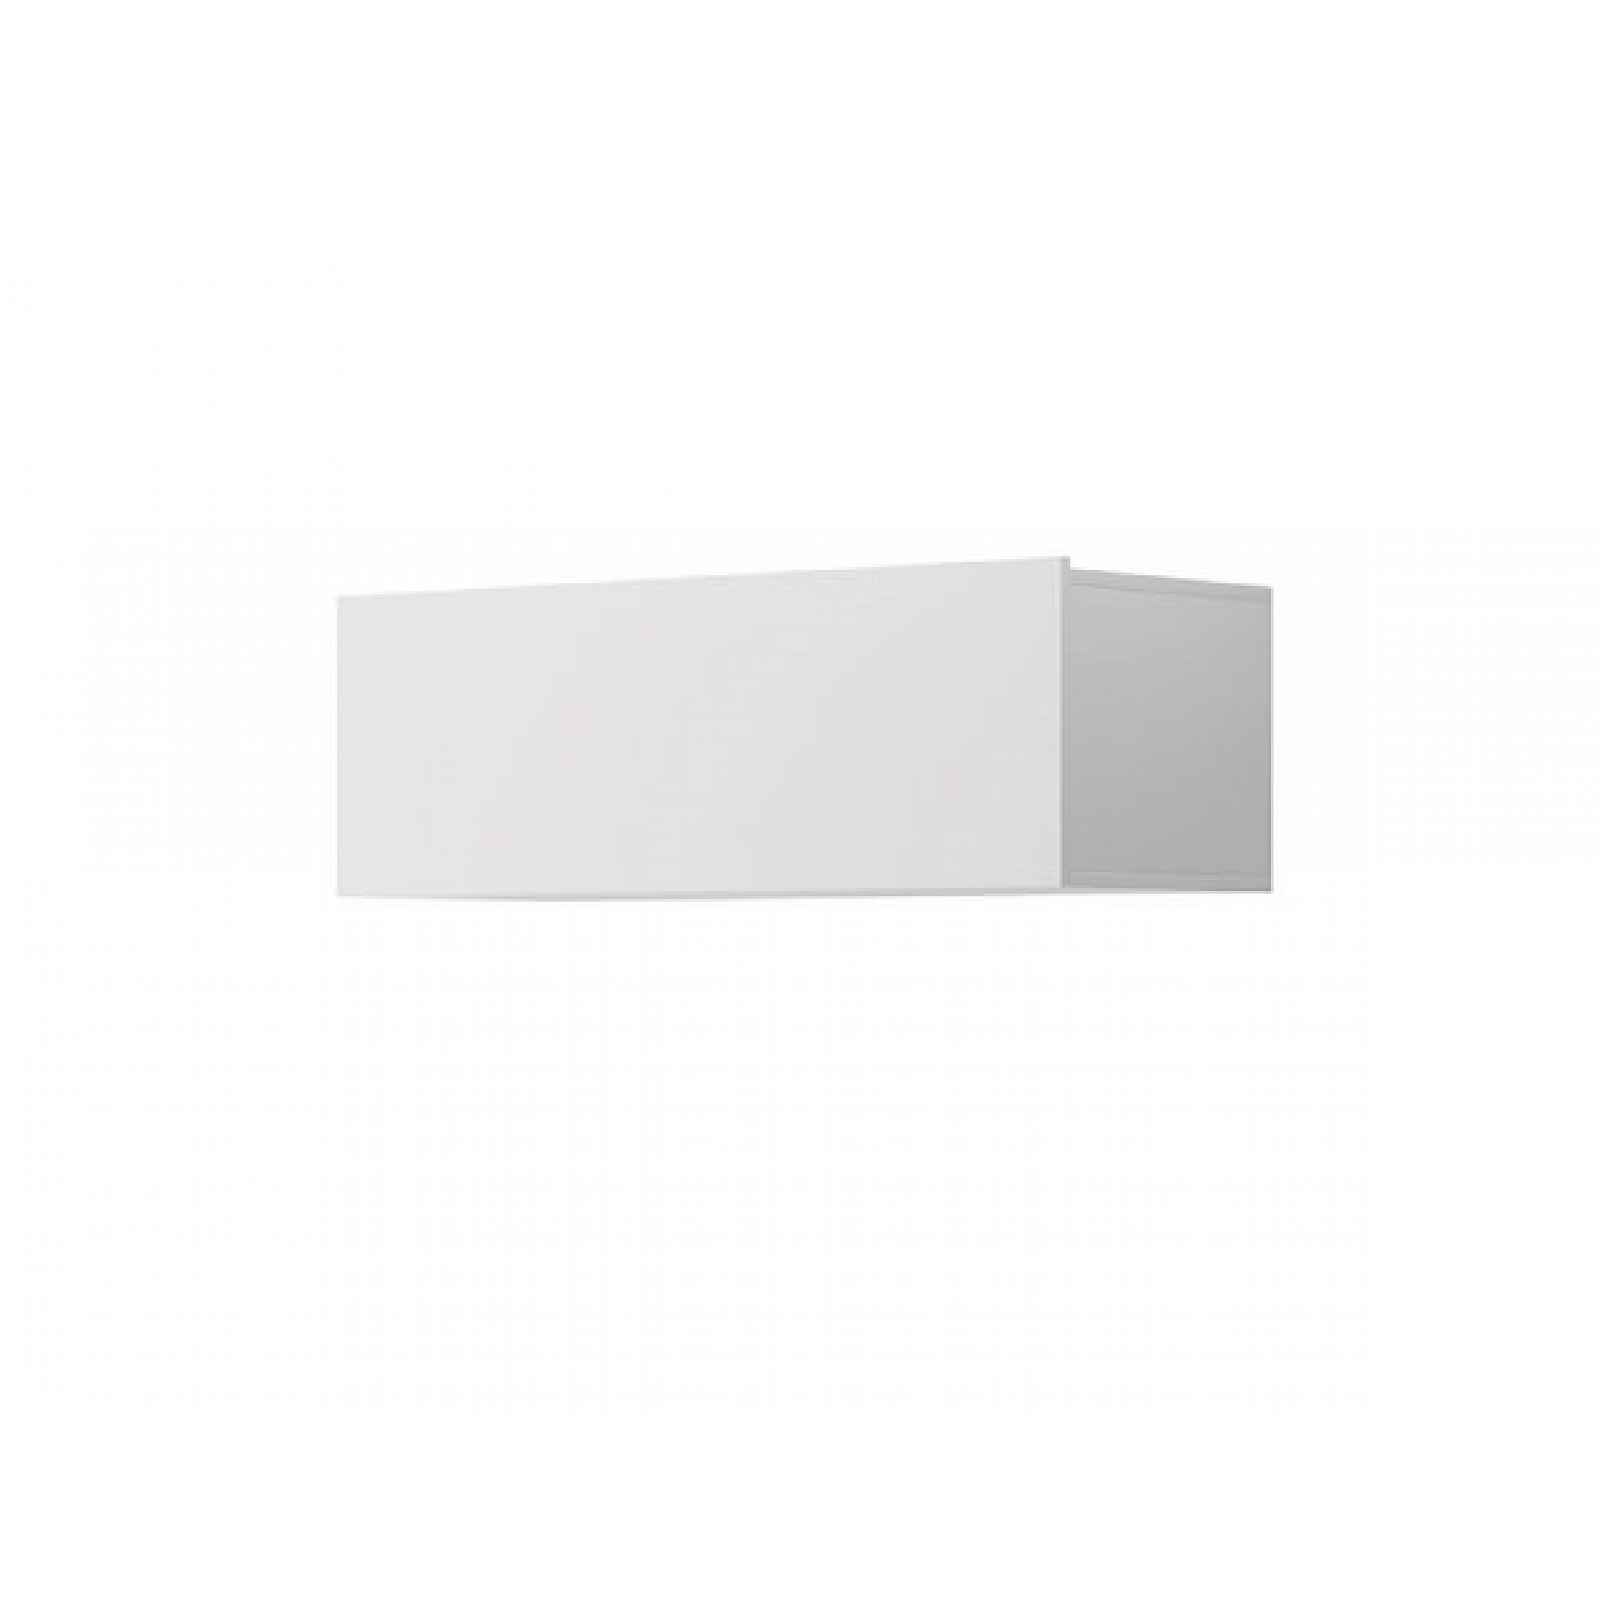 Závěsná skříňka Roulotte 3, bílá